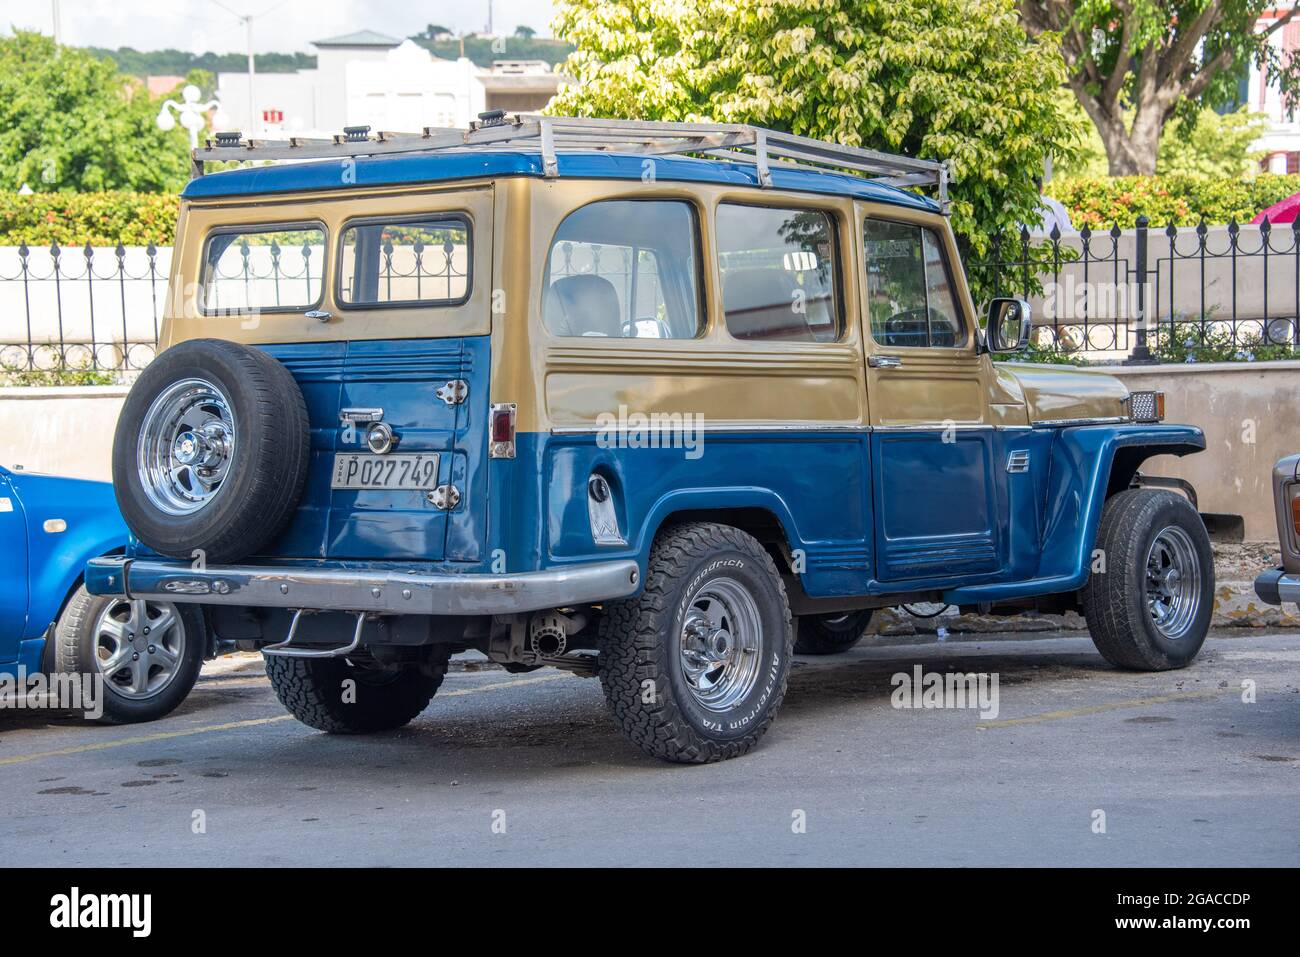 Vintage jeep stationary in Holguin, Cuba, 2016 Stock Photo